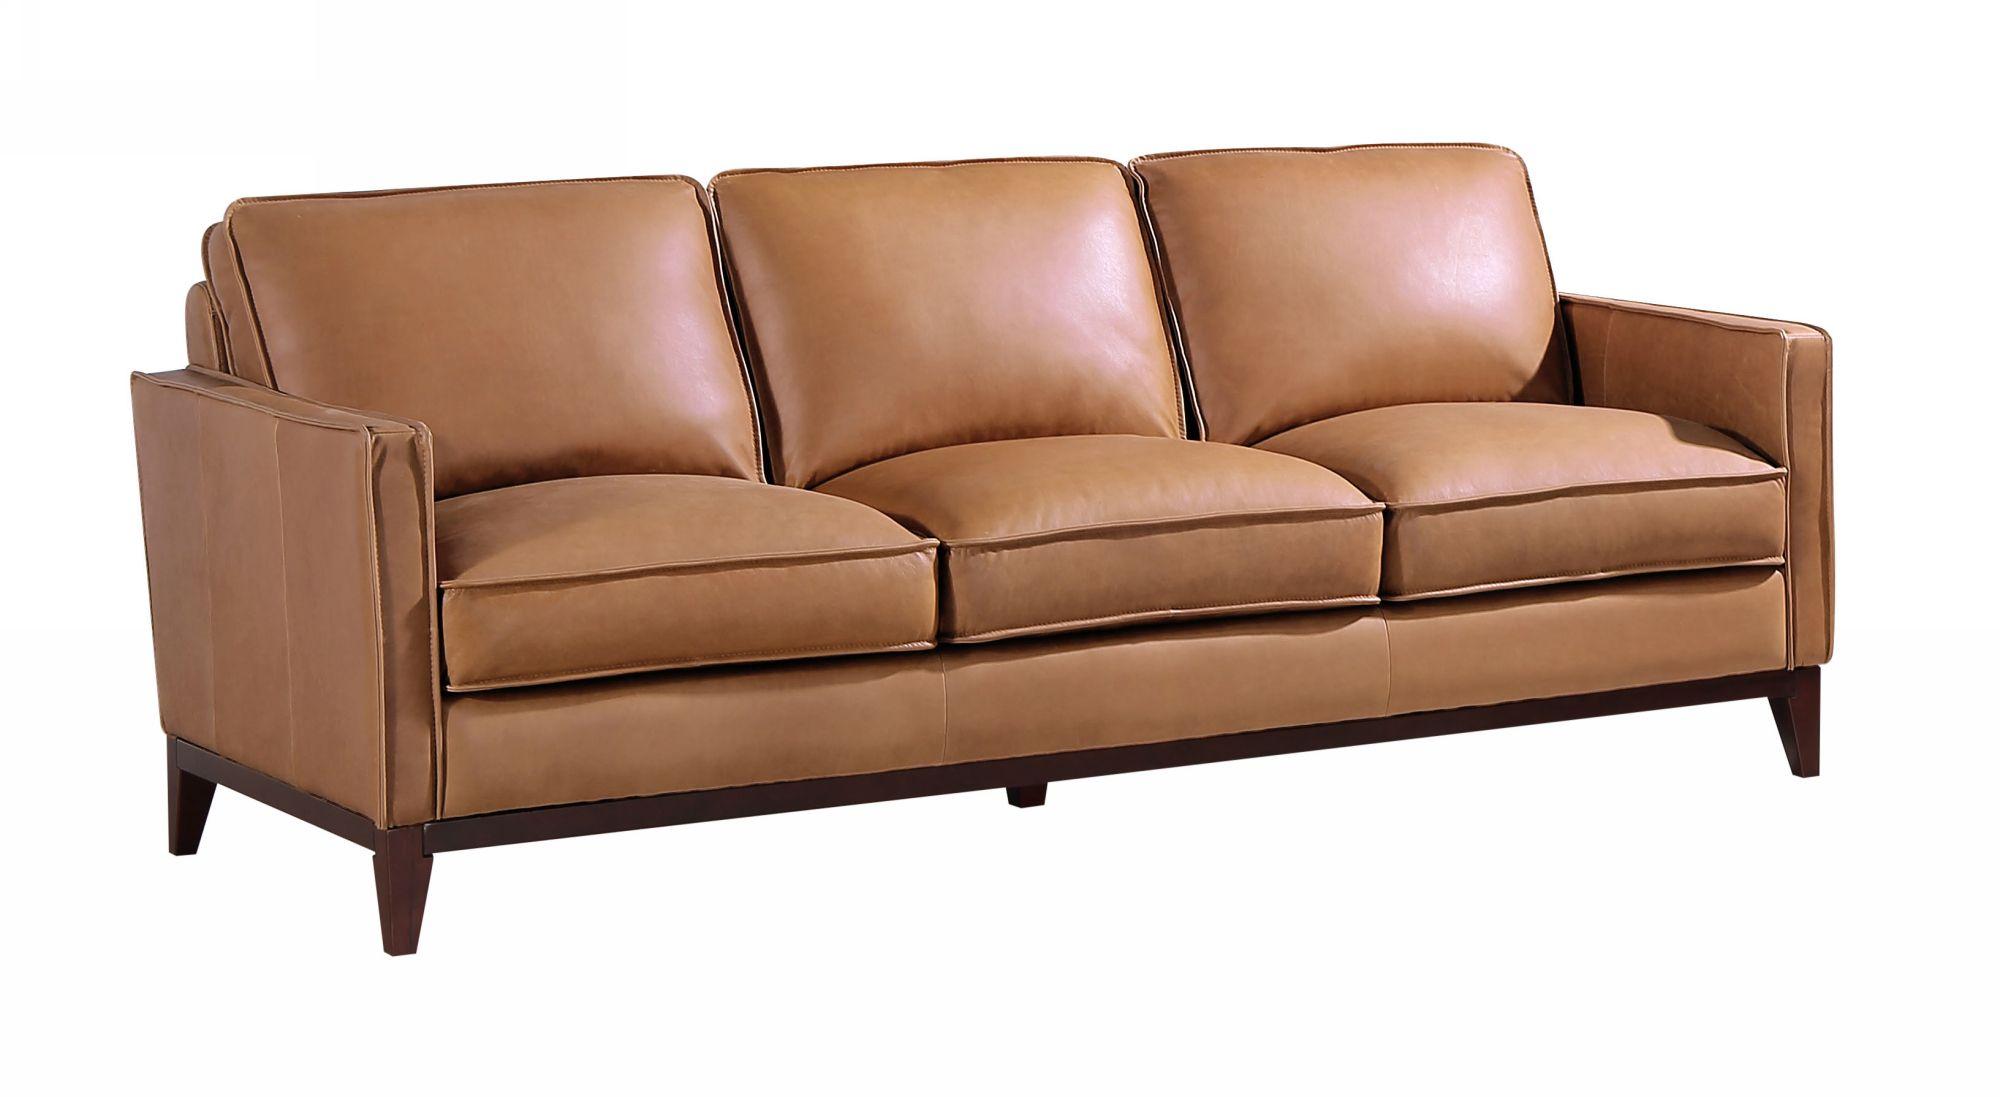 Contemporary, Modern, Classic Sofa VGCA6394-BRN-S VGCA6394-BRN-S in Brown Italian Leather